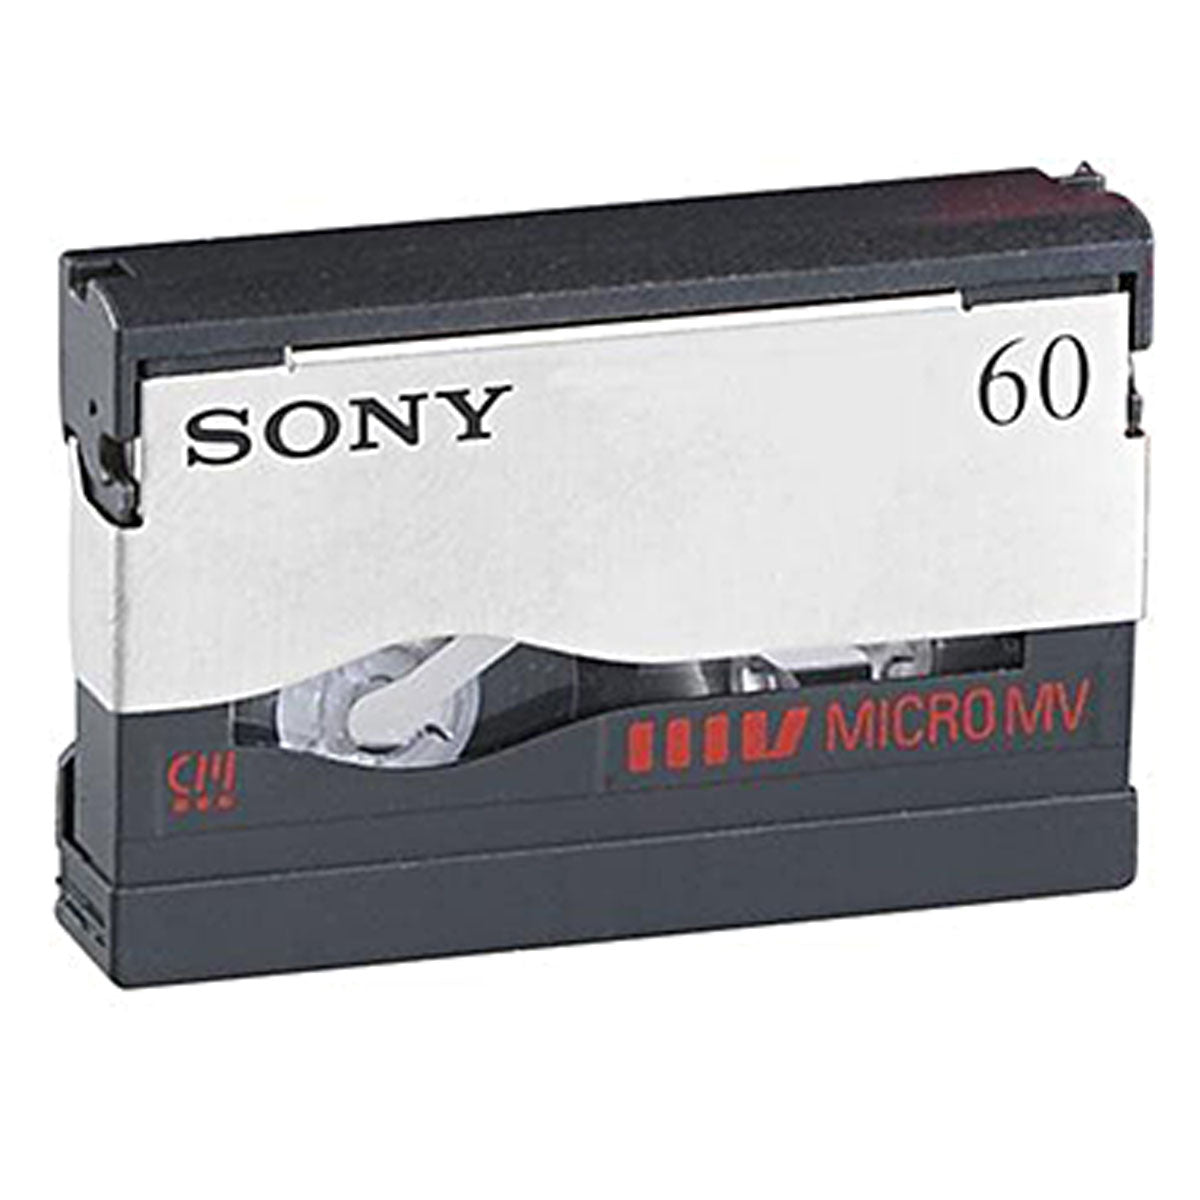 Micro MV Video Cassette Transfer